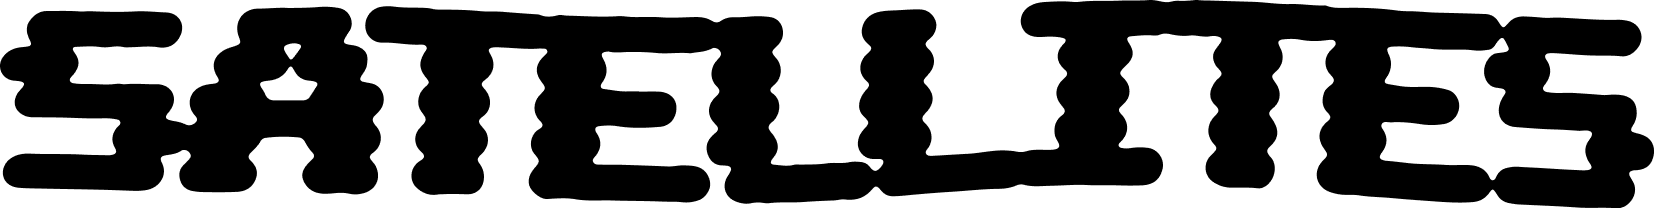 Satellites logo